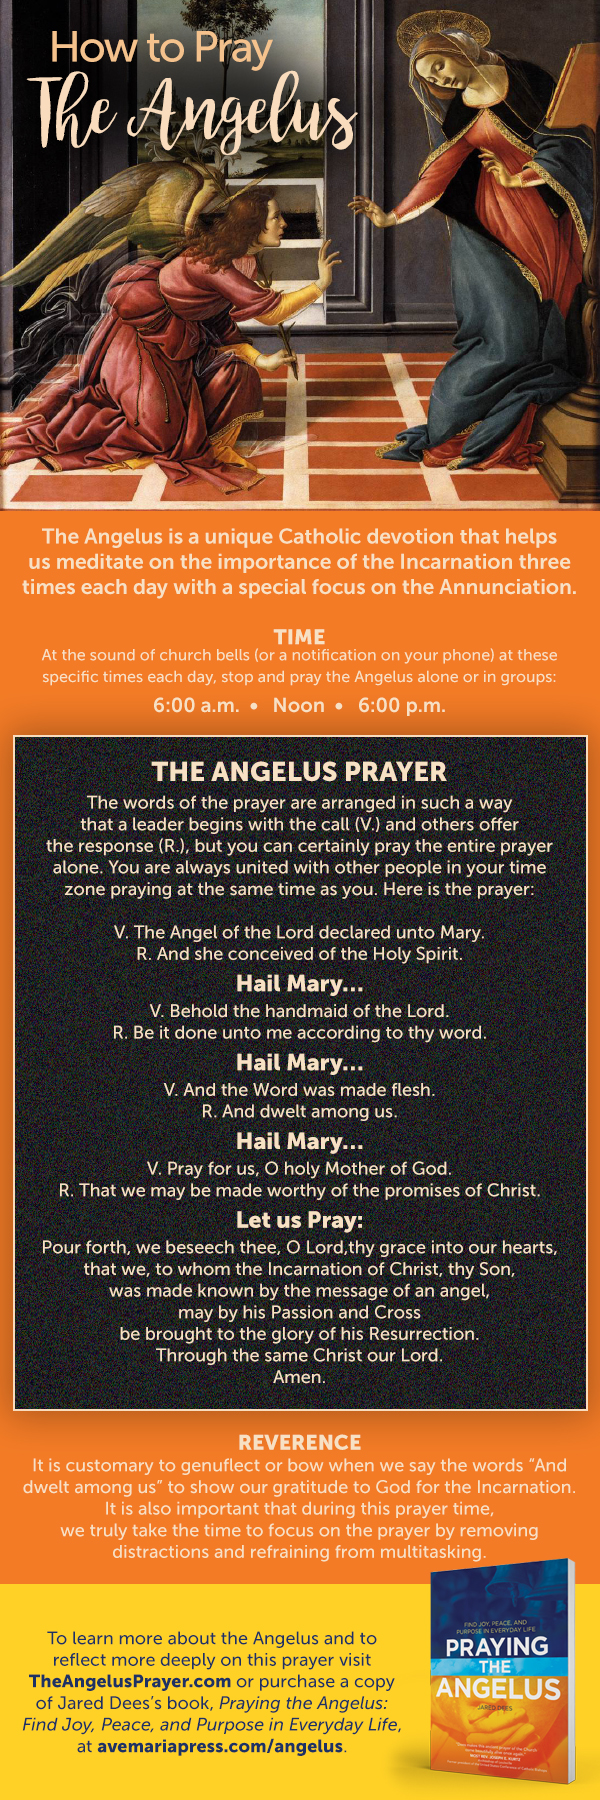 How to Pray the Angelus